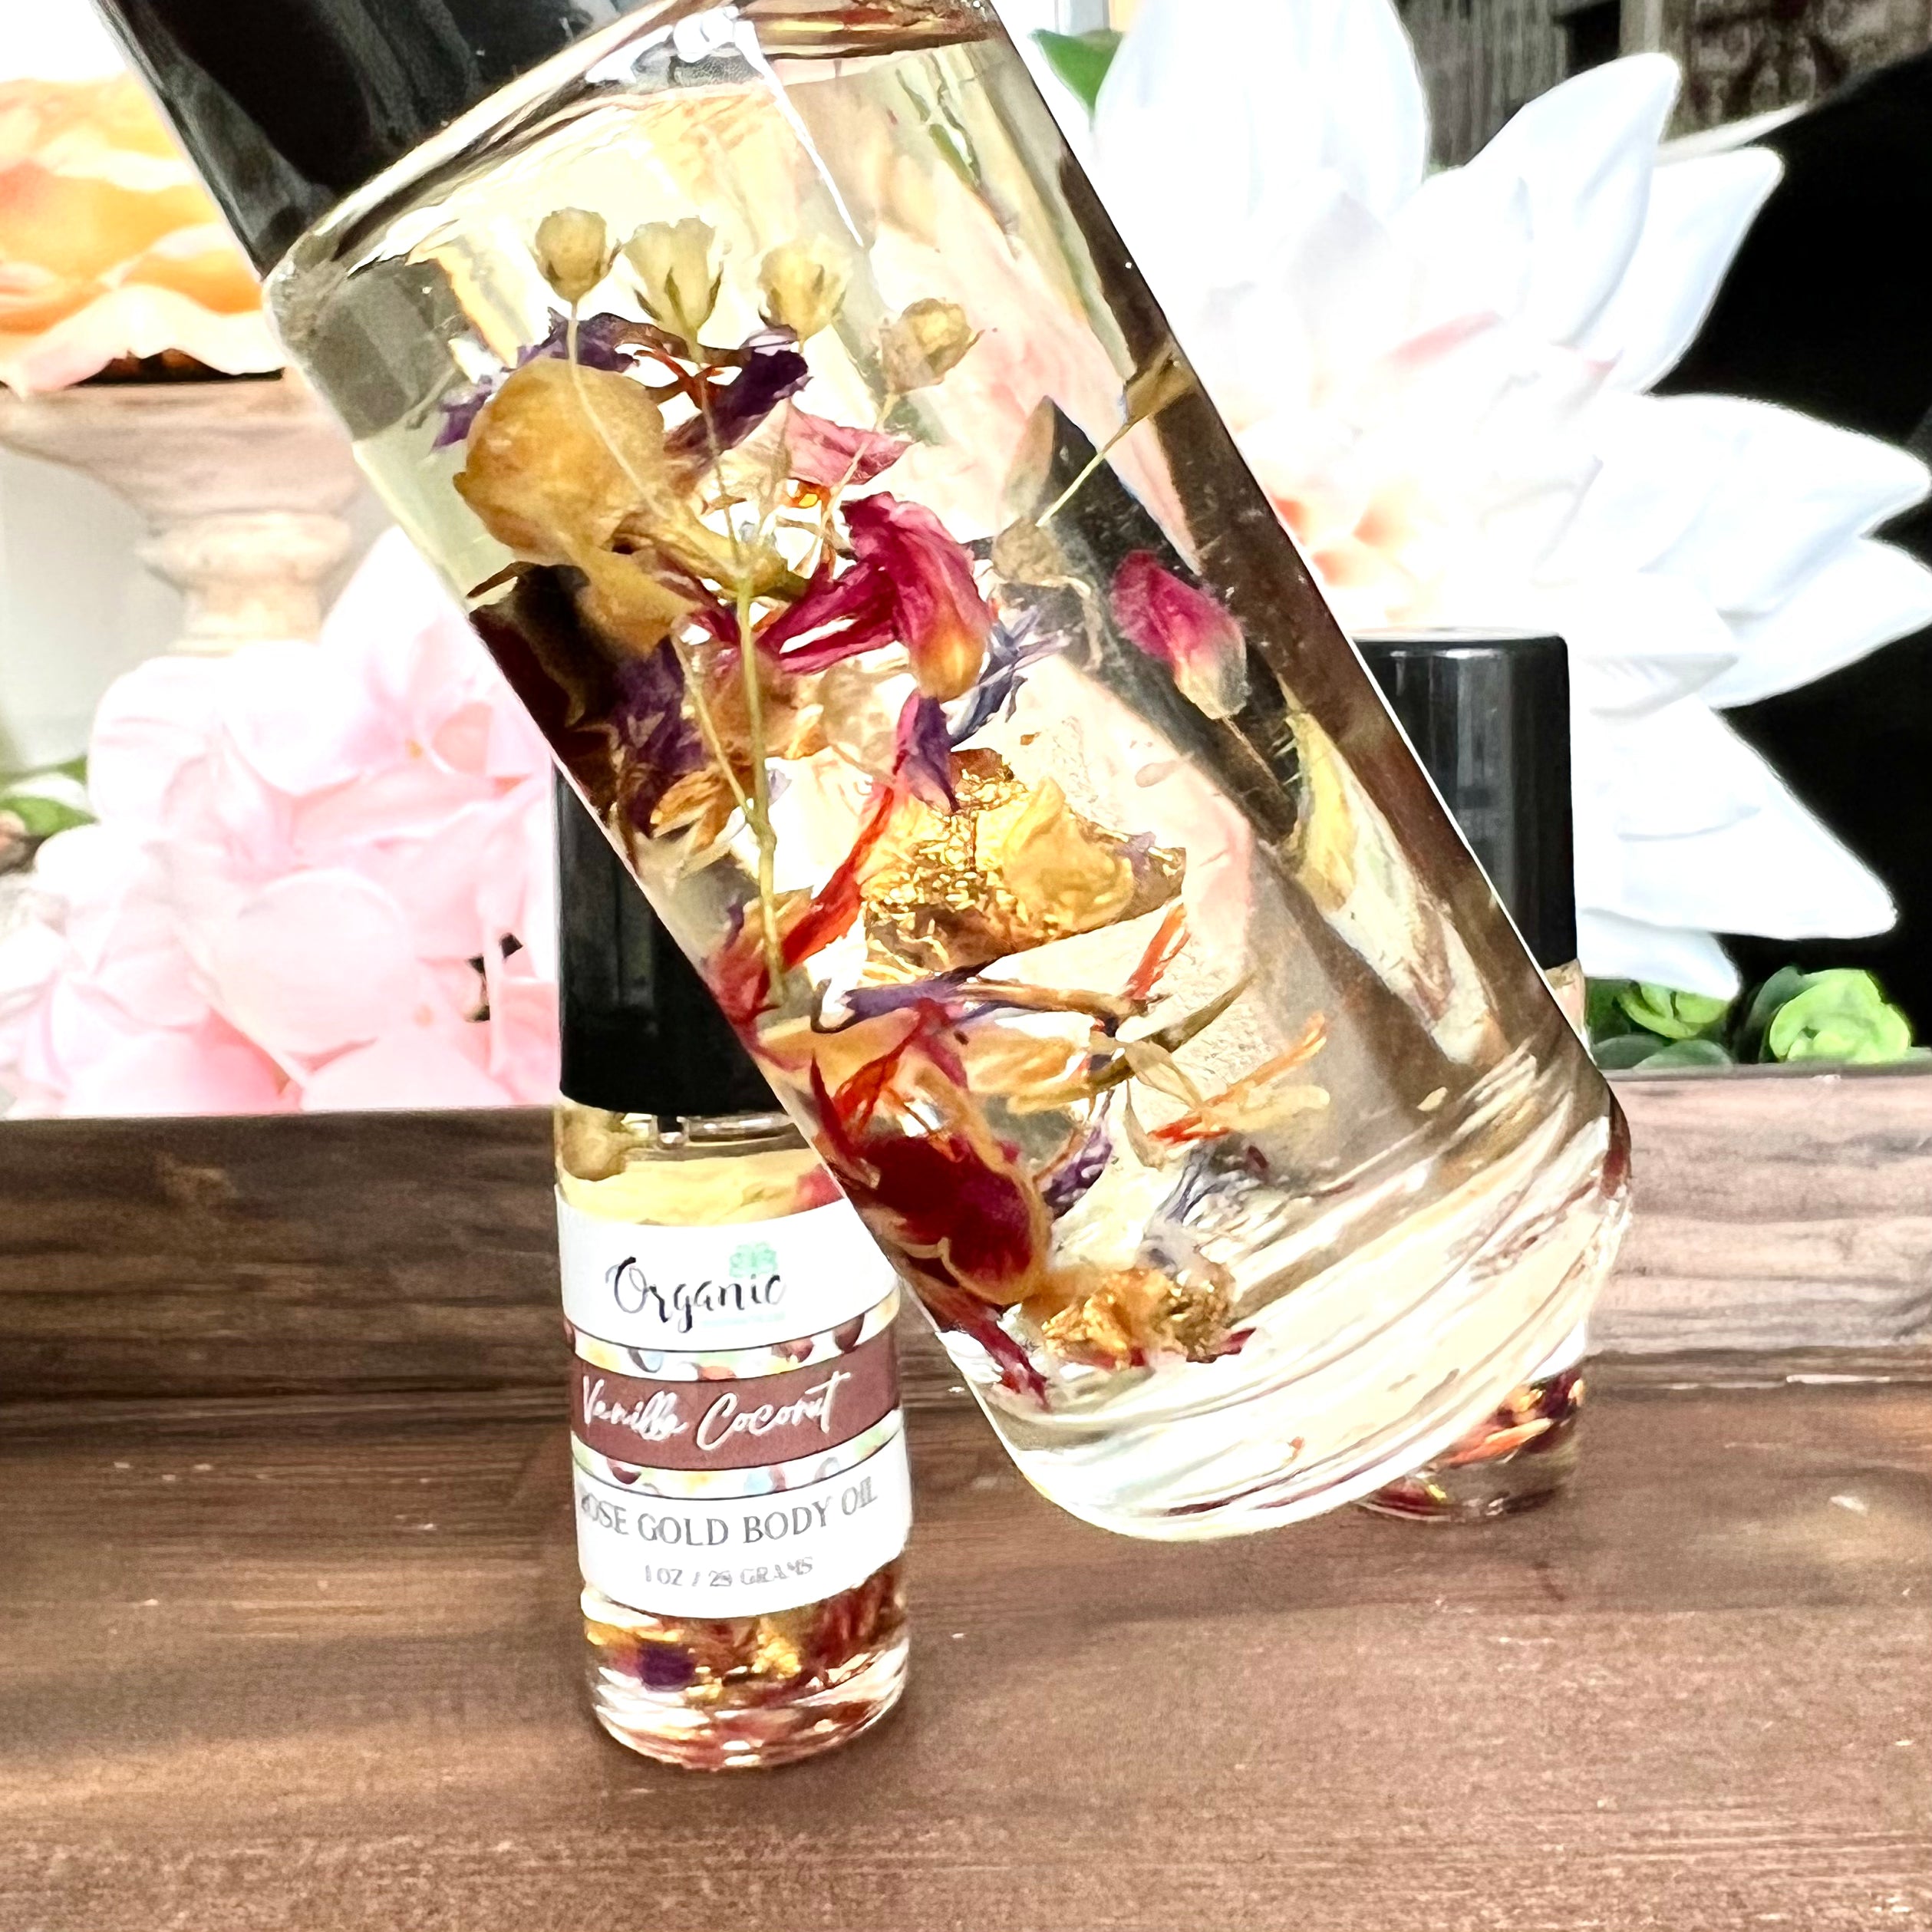 Rose Gold Body Oil - Vanilla Coconut Organic inspirations